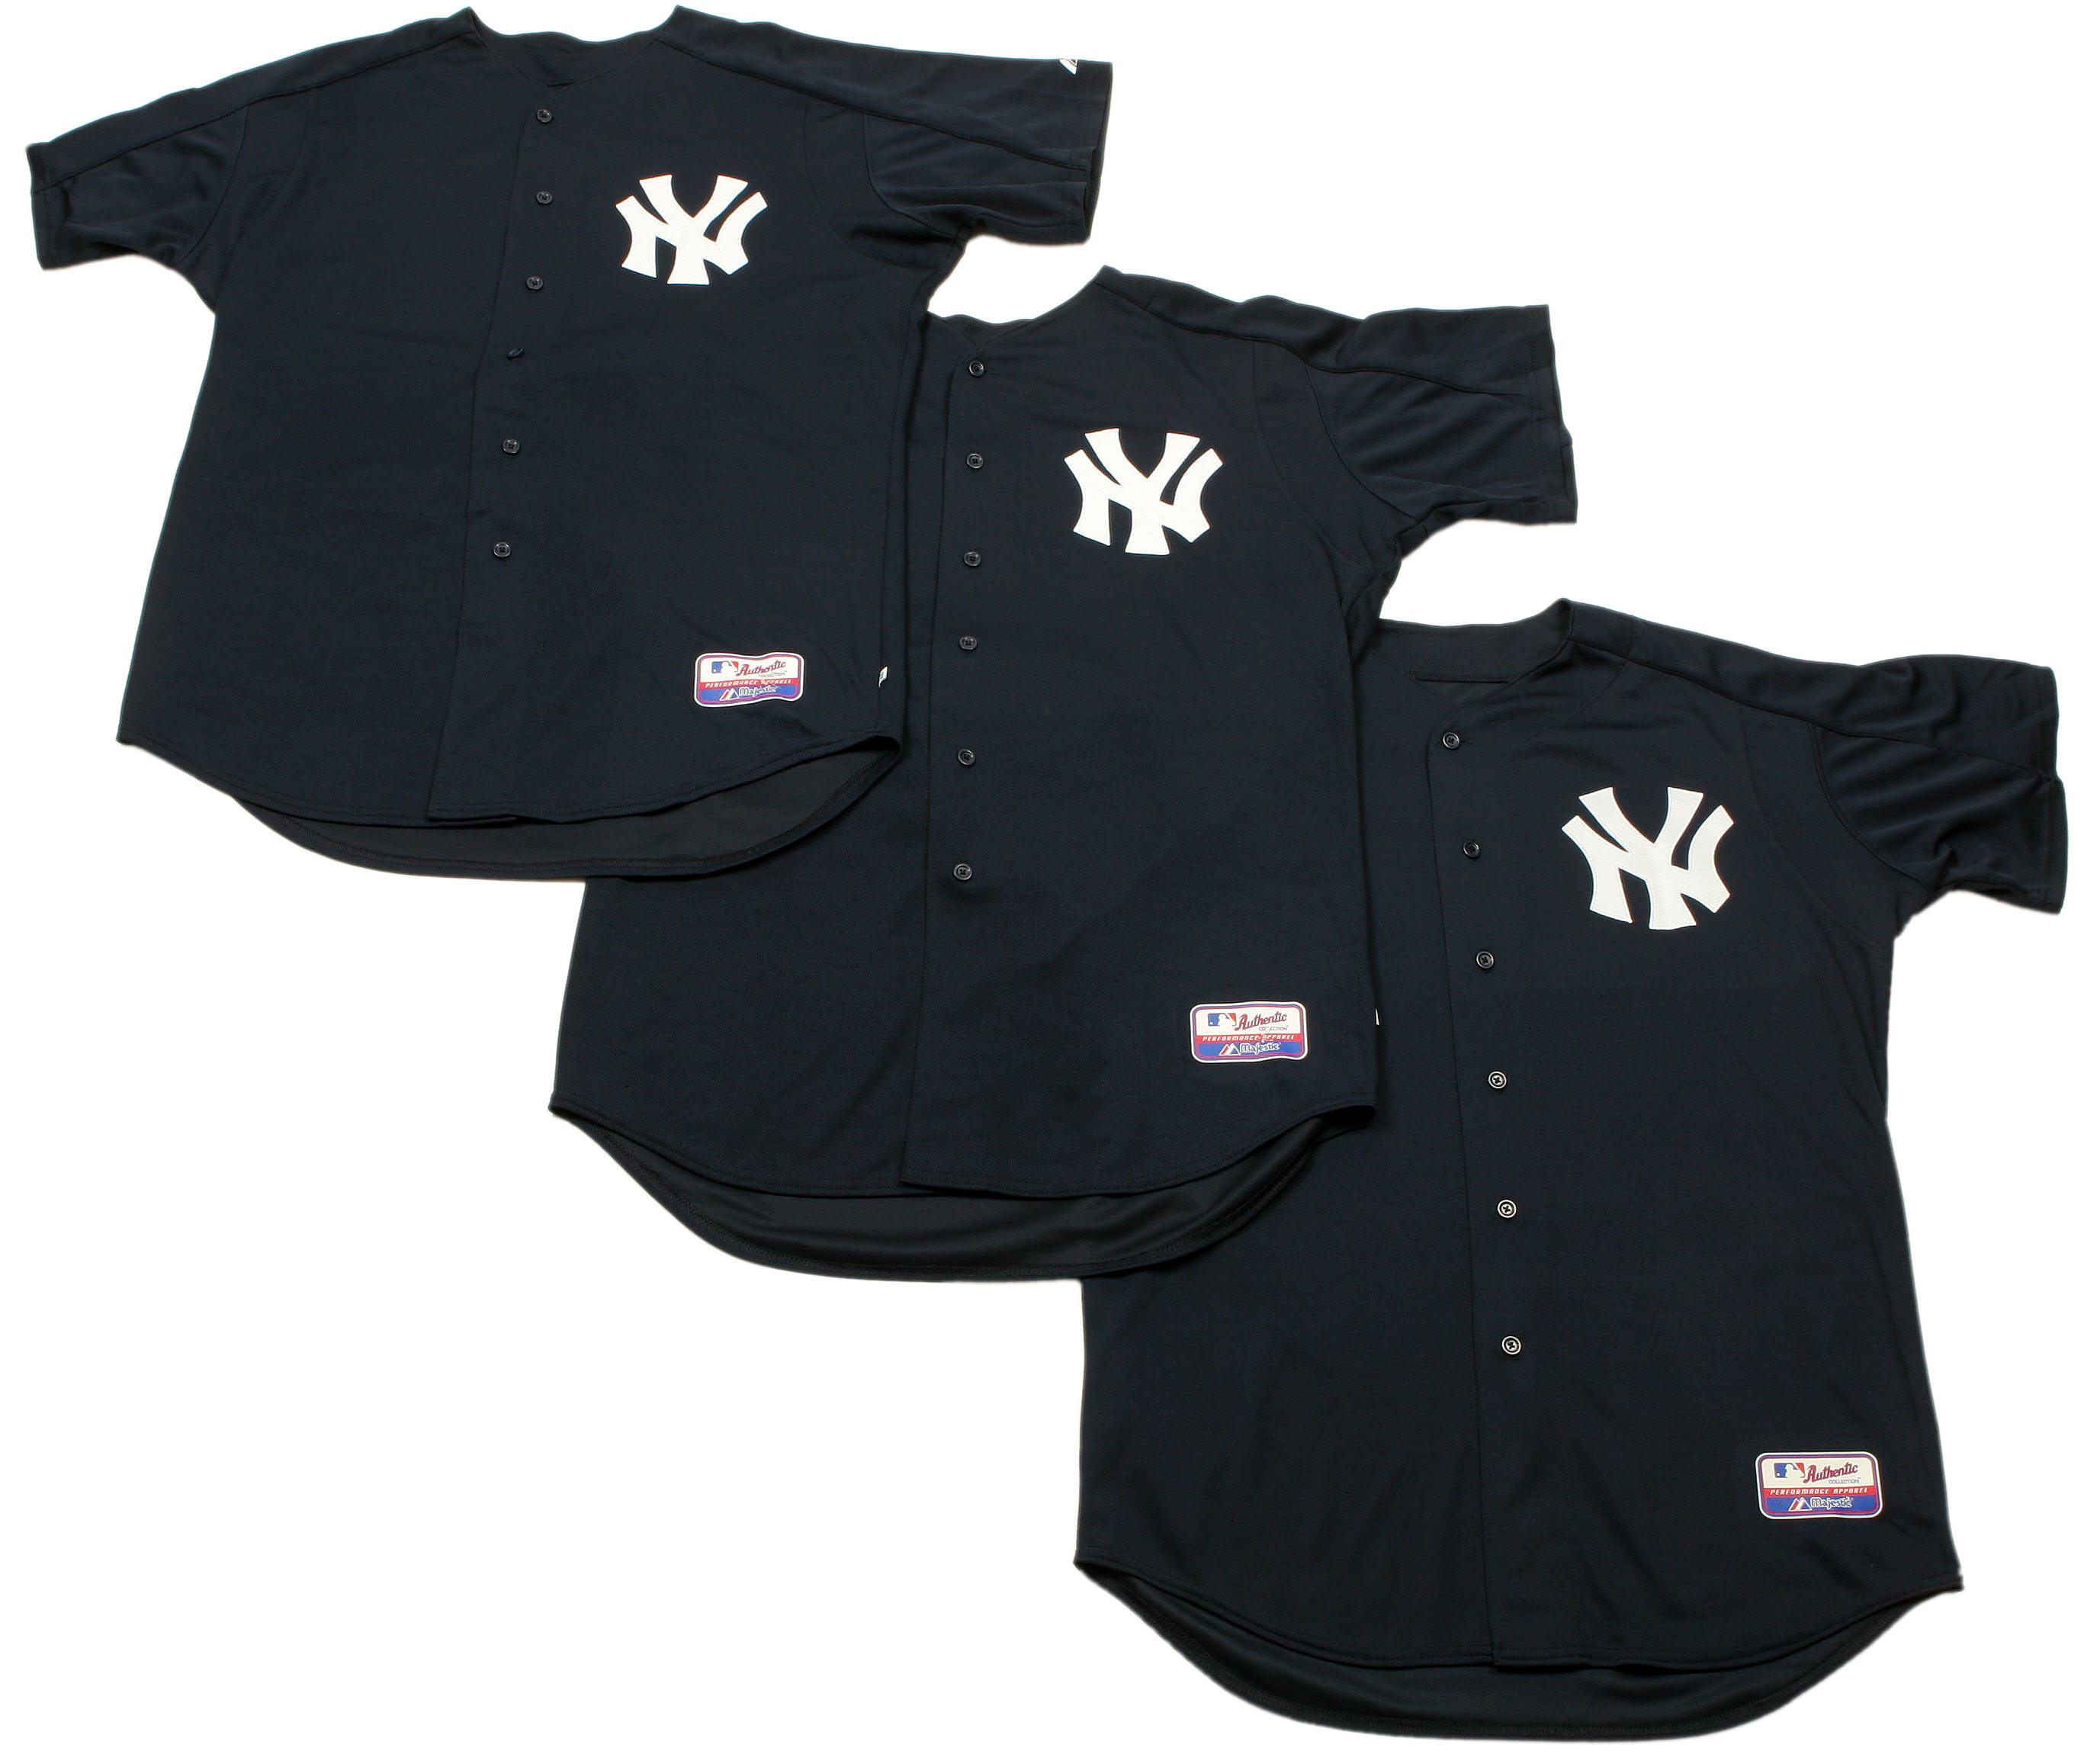 2004 New York Yankees Batting Practice Jerseys From Japanese, Lot #12517